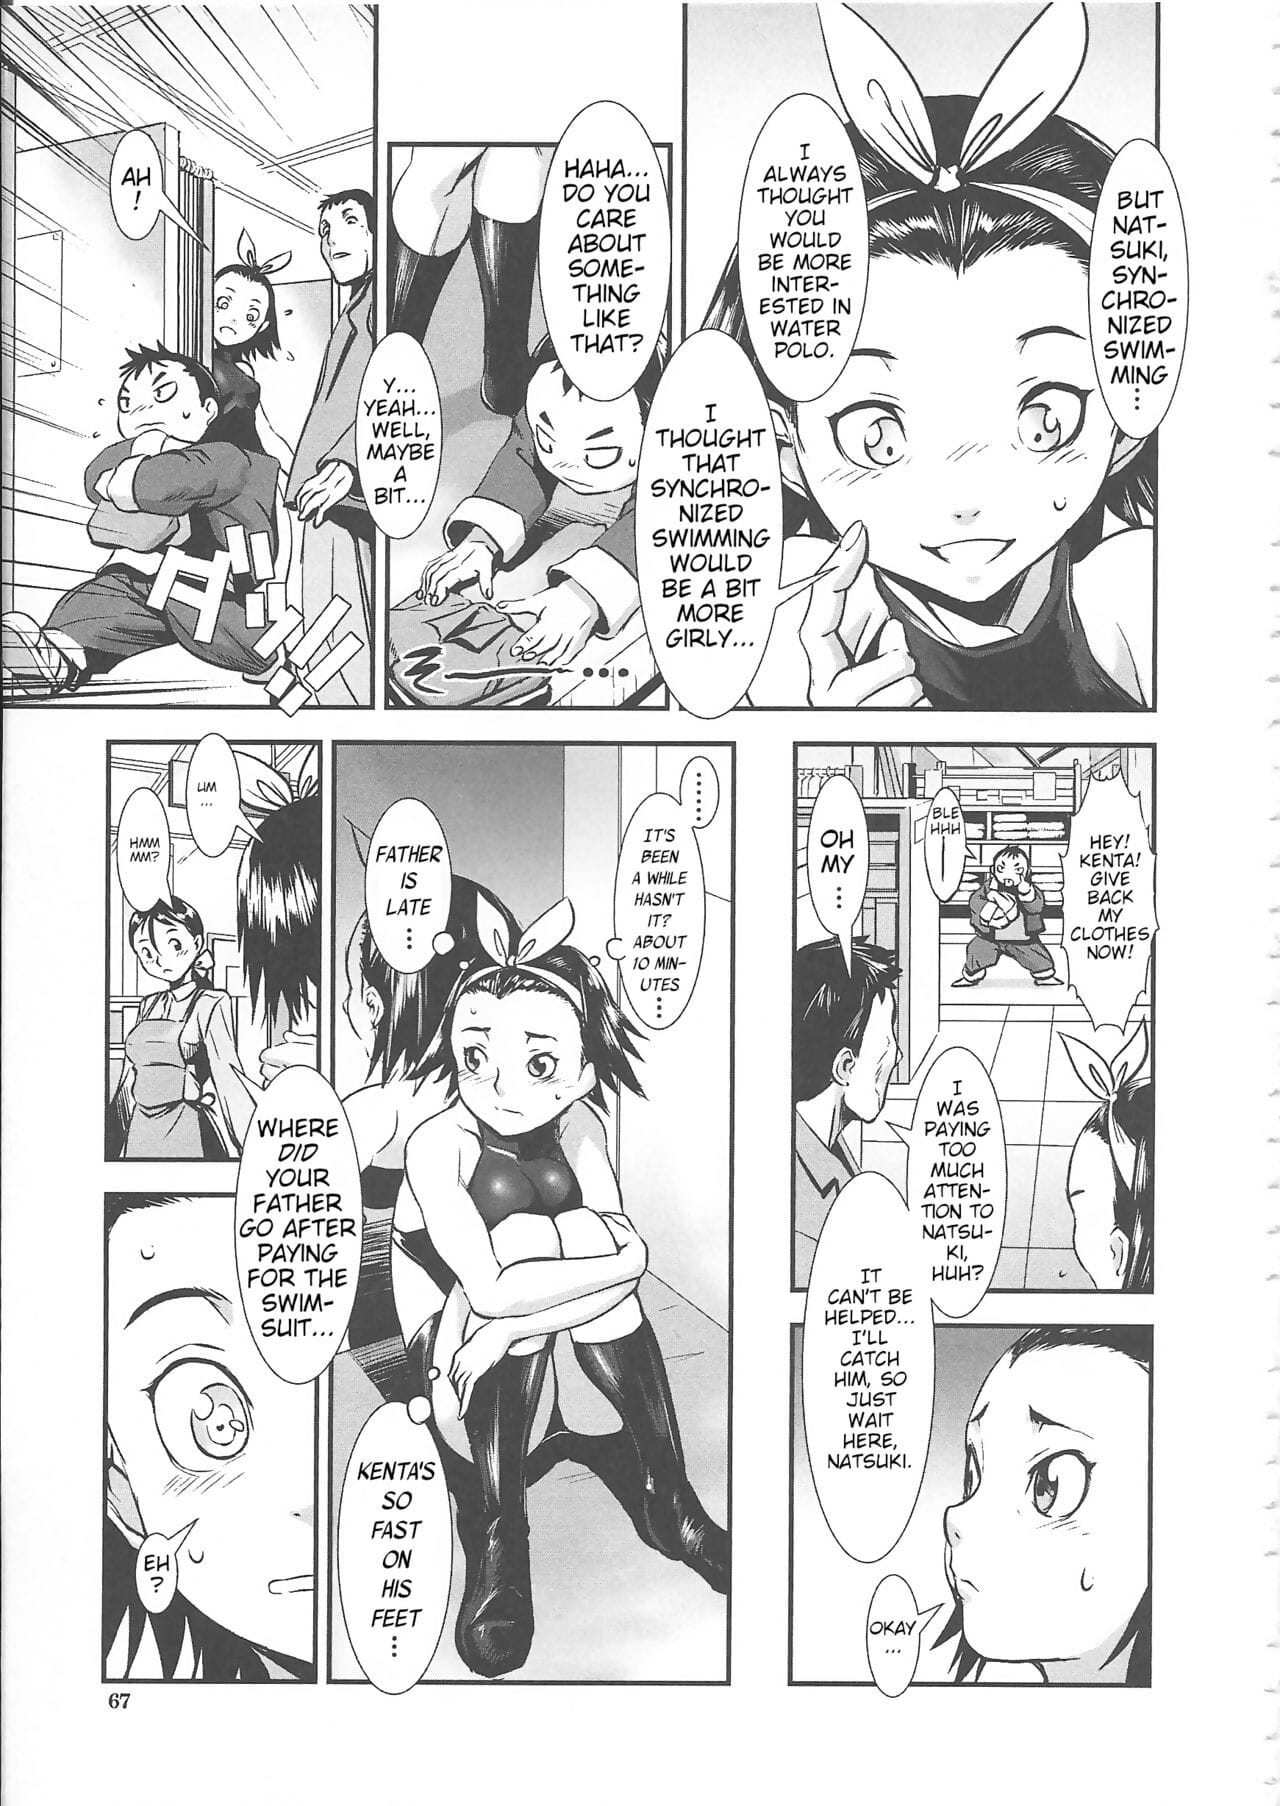 Kodomo janai - Im not a kid anymore! page 1